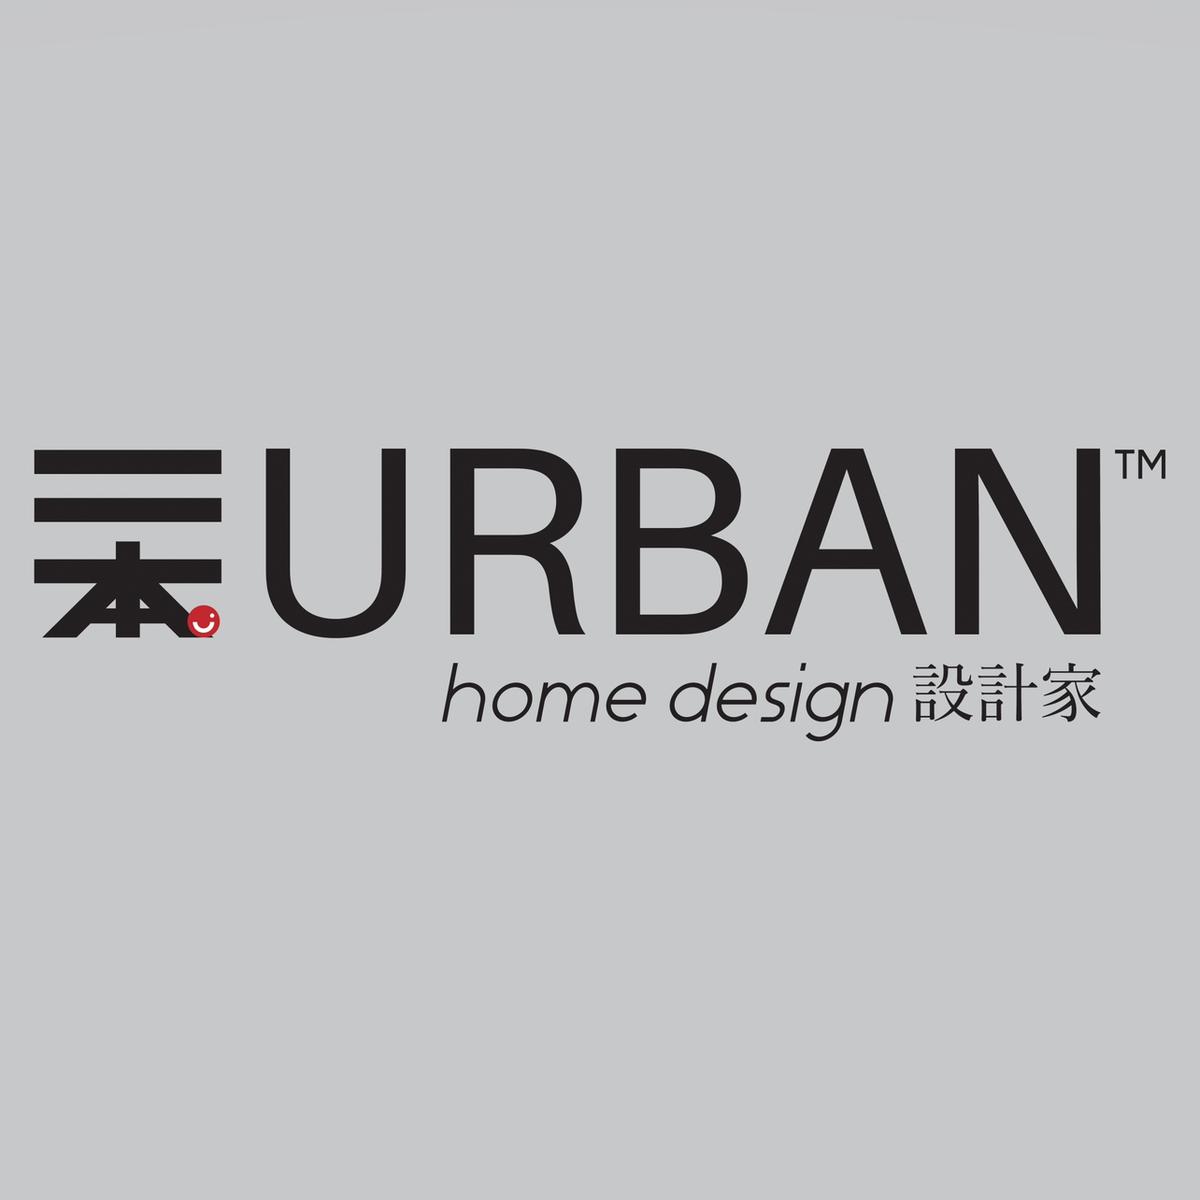 UrbanHomeDesign's images